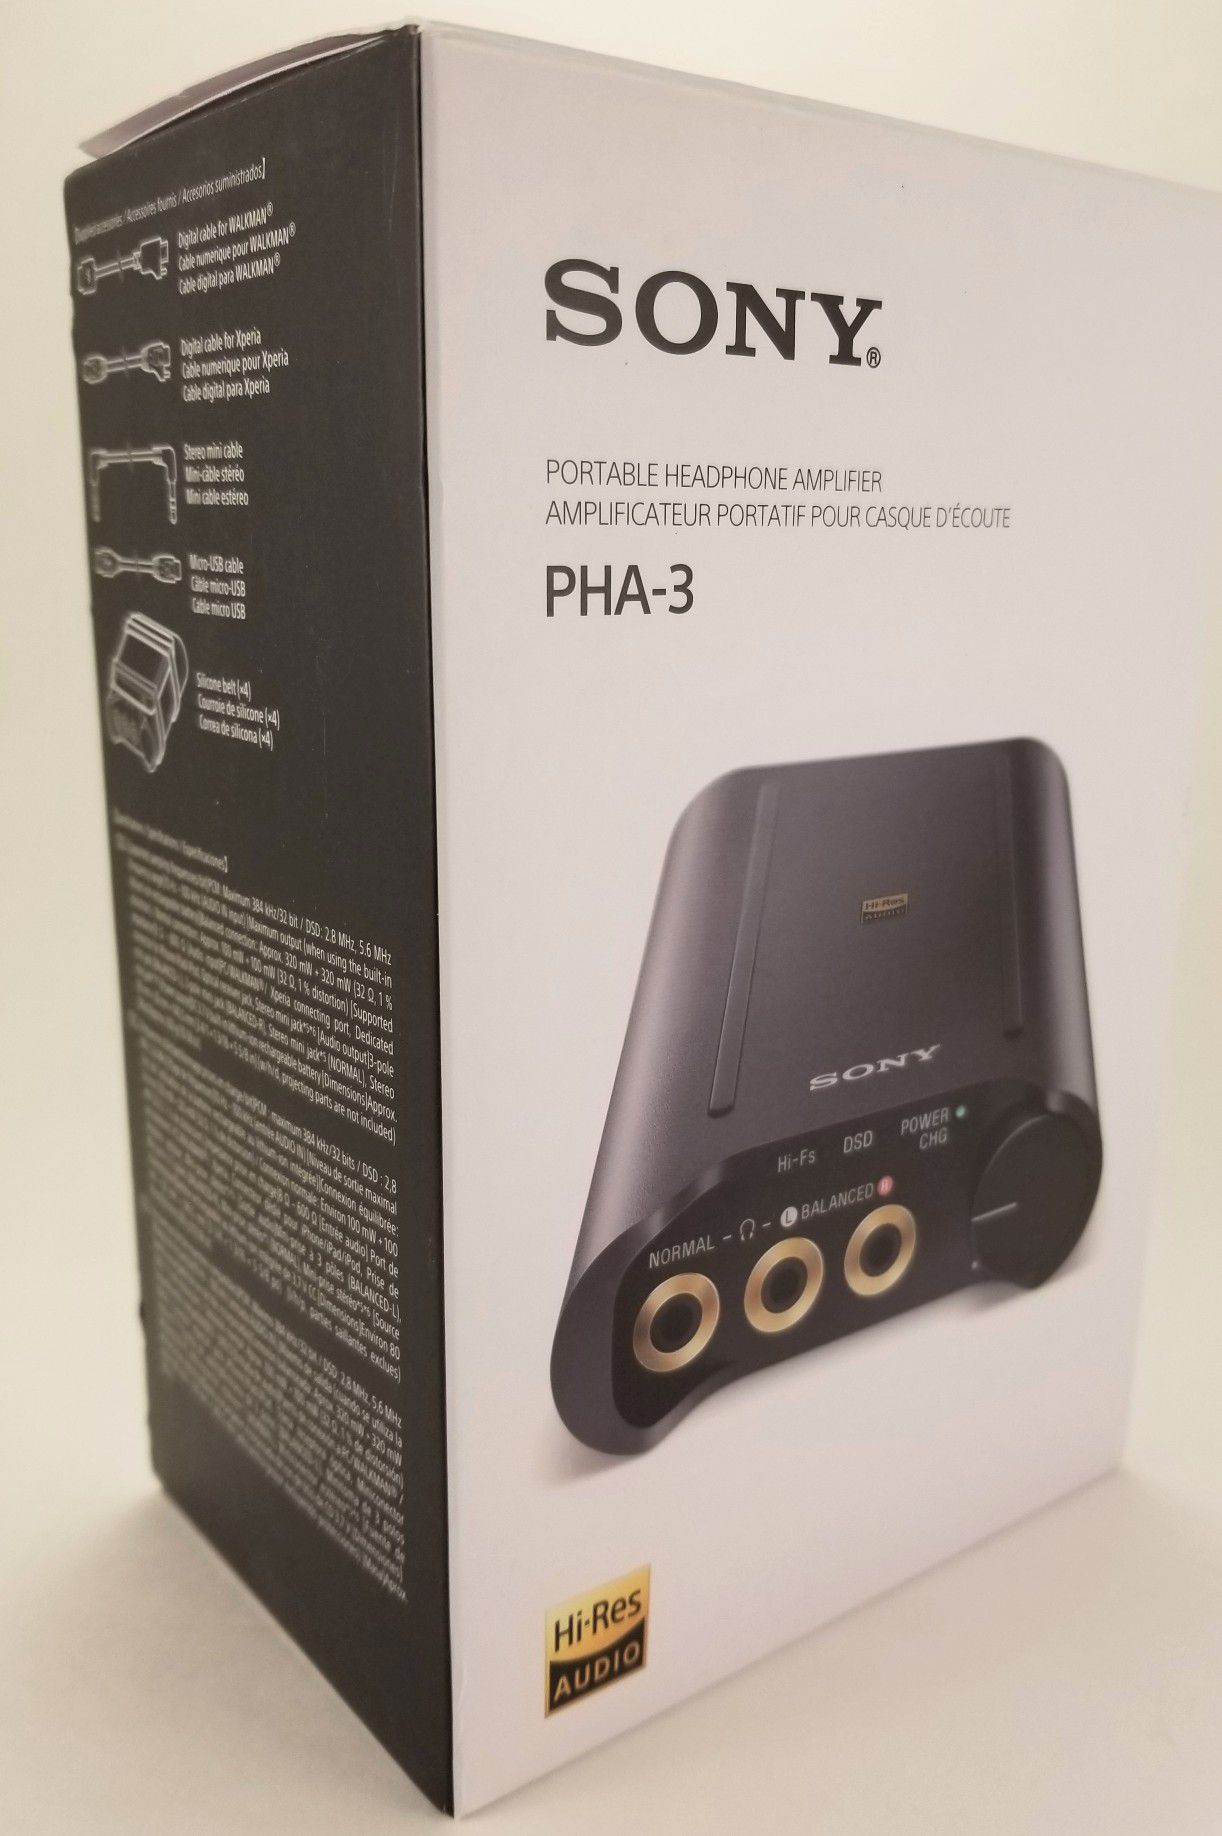 Portable Headphone Amplifier, Sony PHA-3